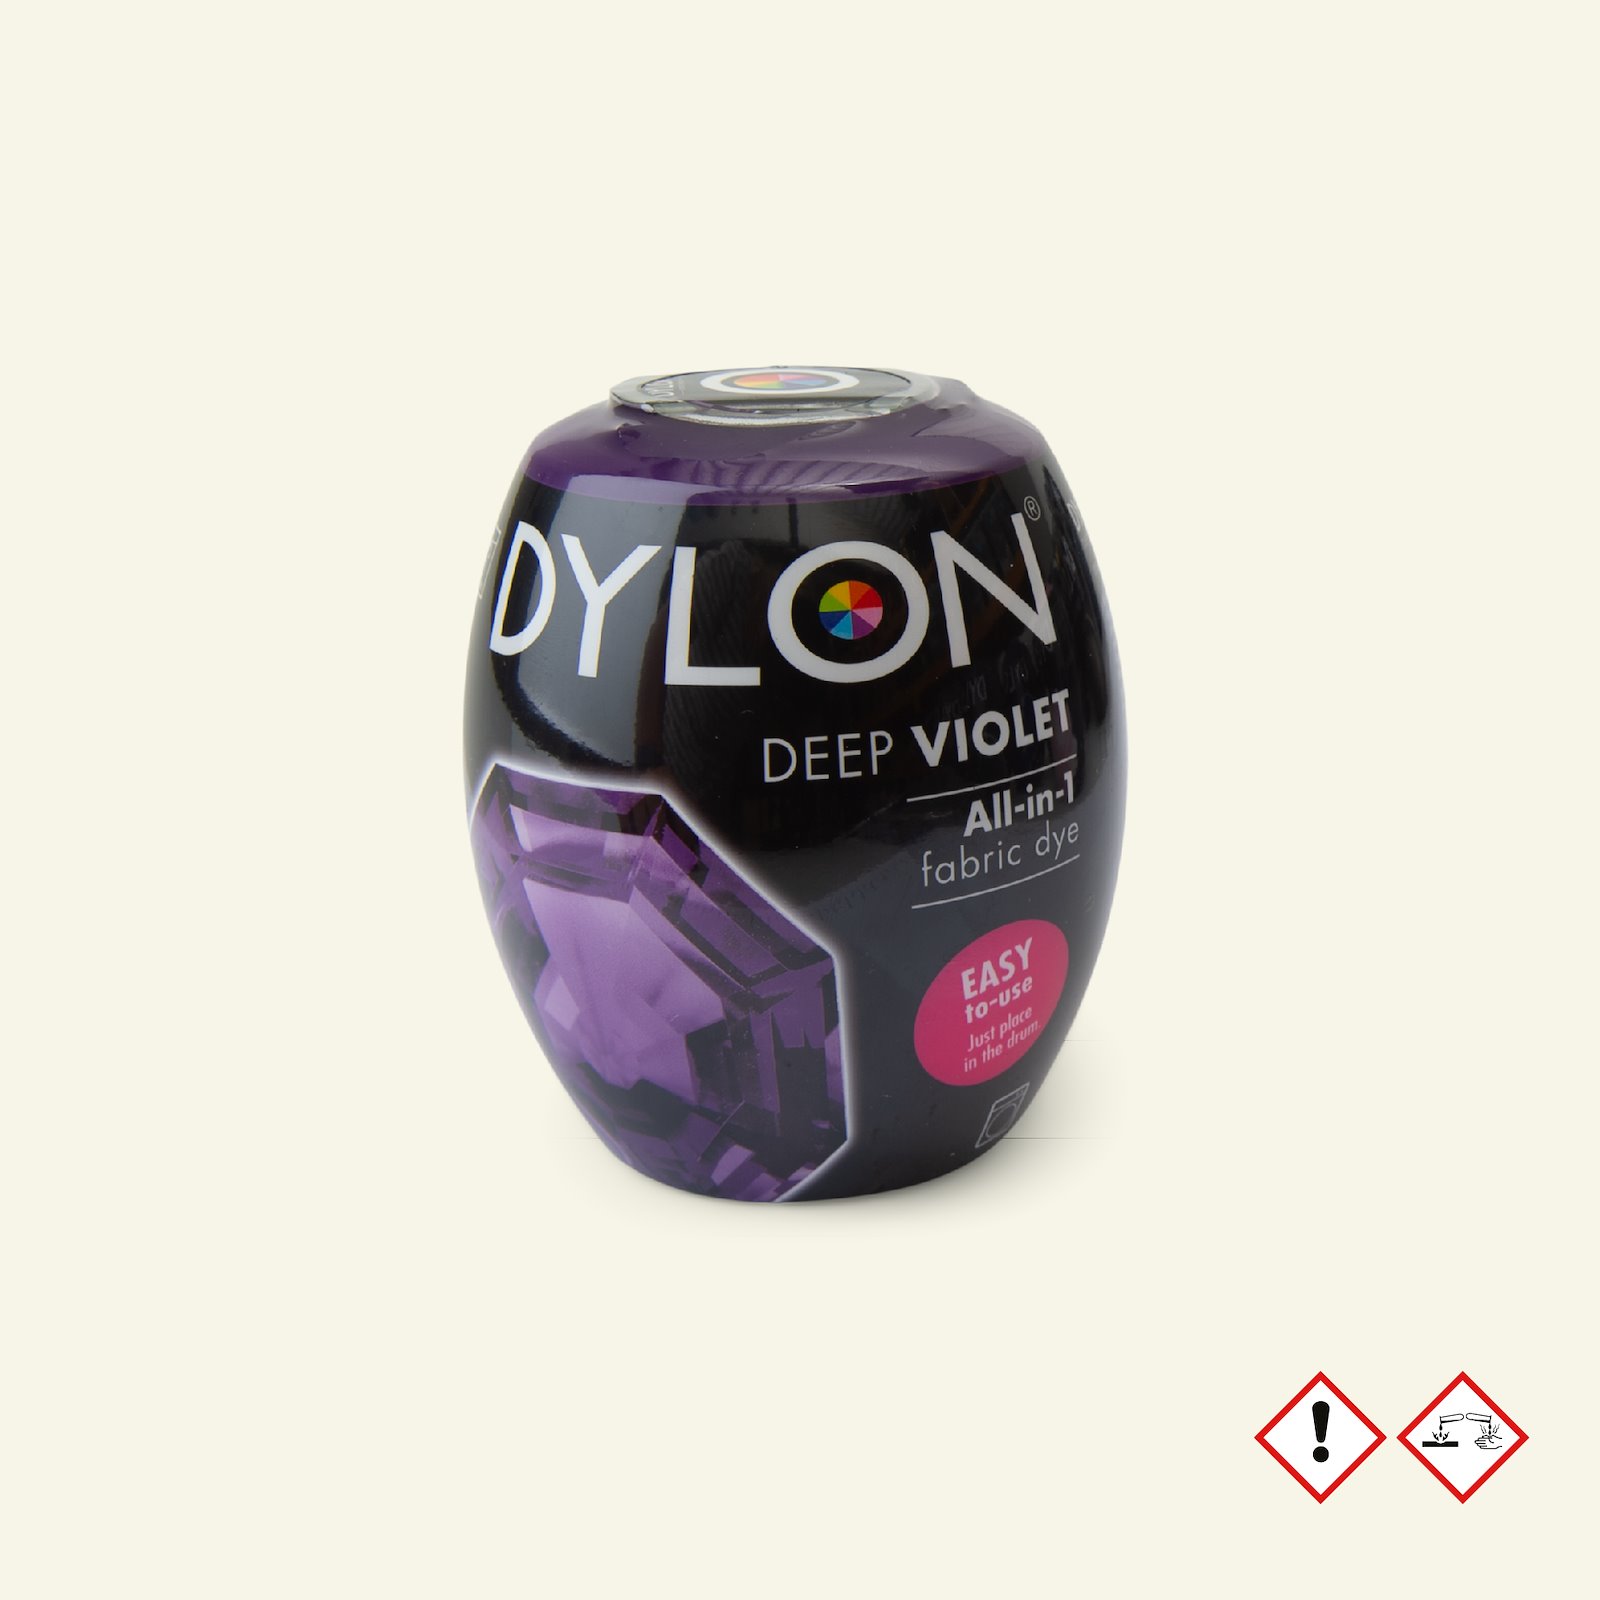 Dylon maskinfärg lila 29708_pack